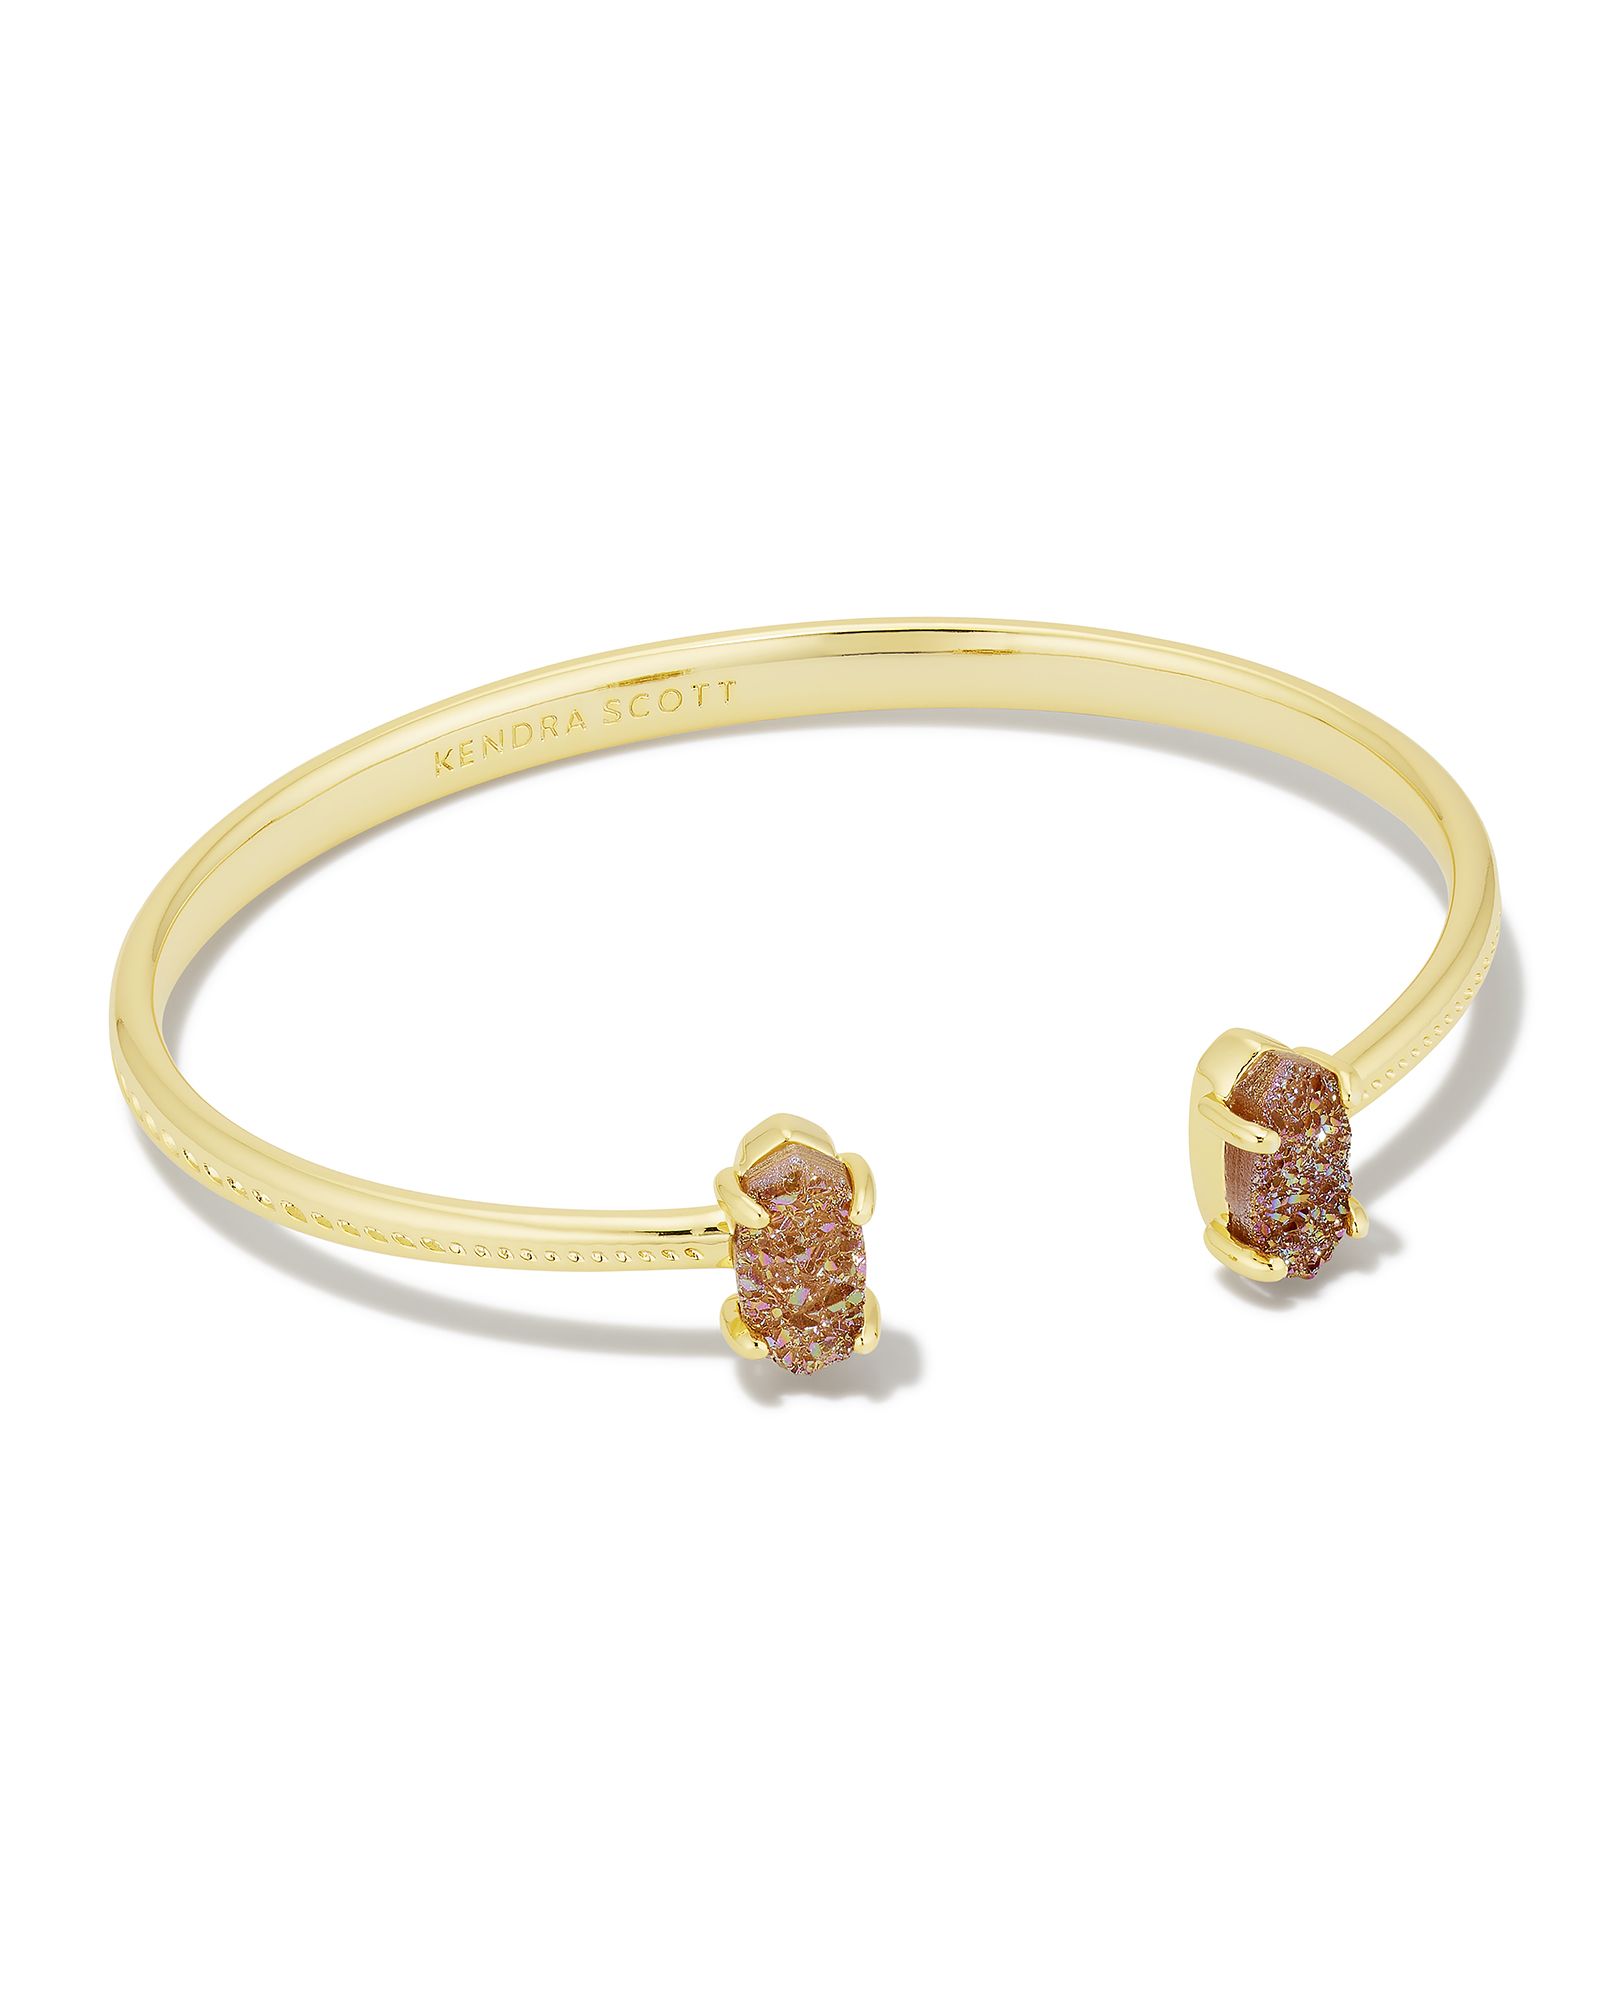 Grayson Gold Stone Cuff Bracelet in Spice Drusy | Kendra Scott